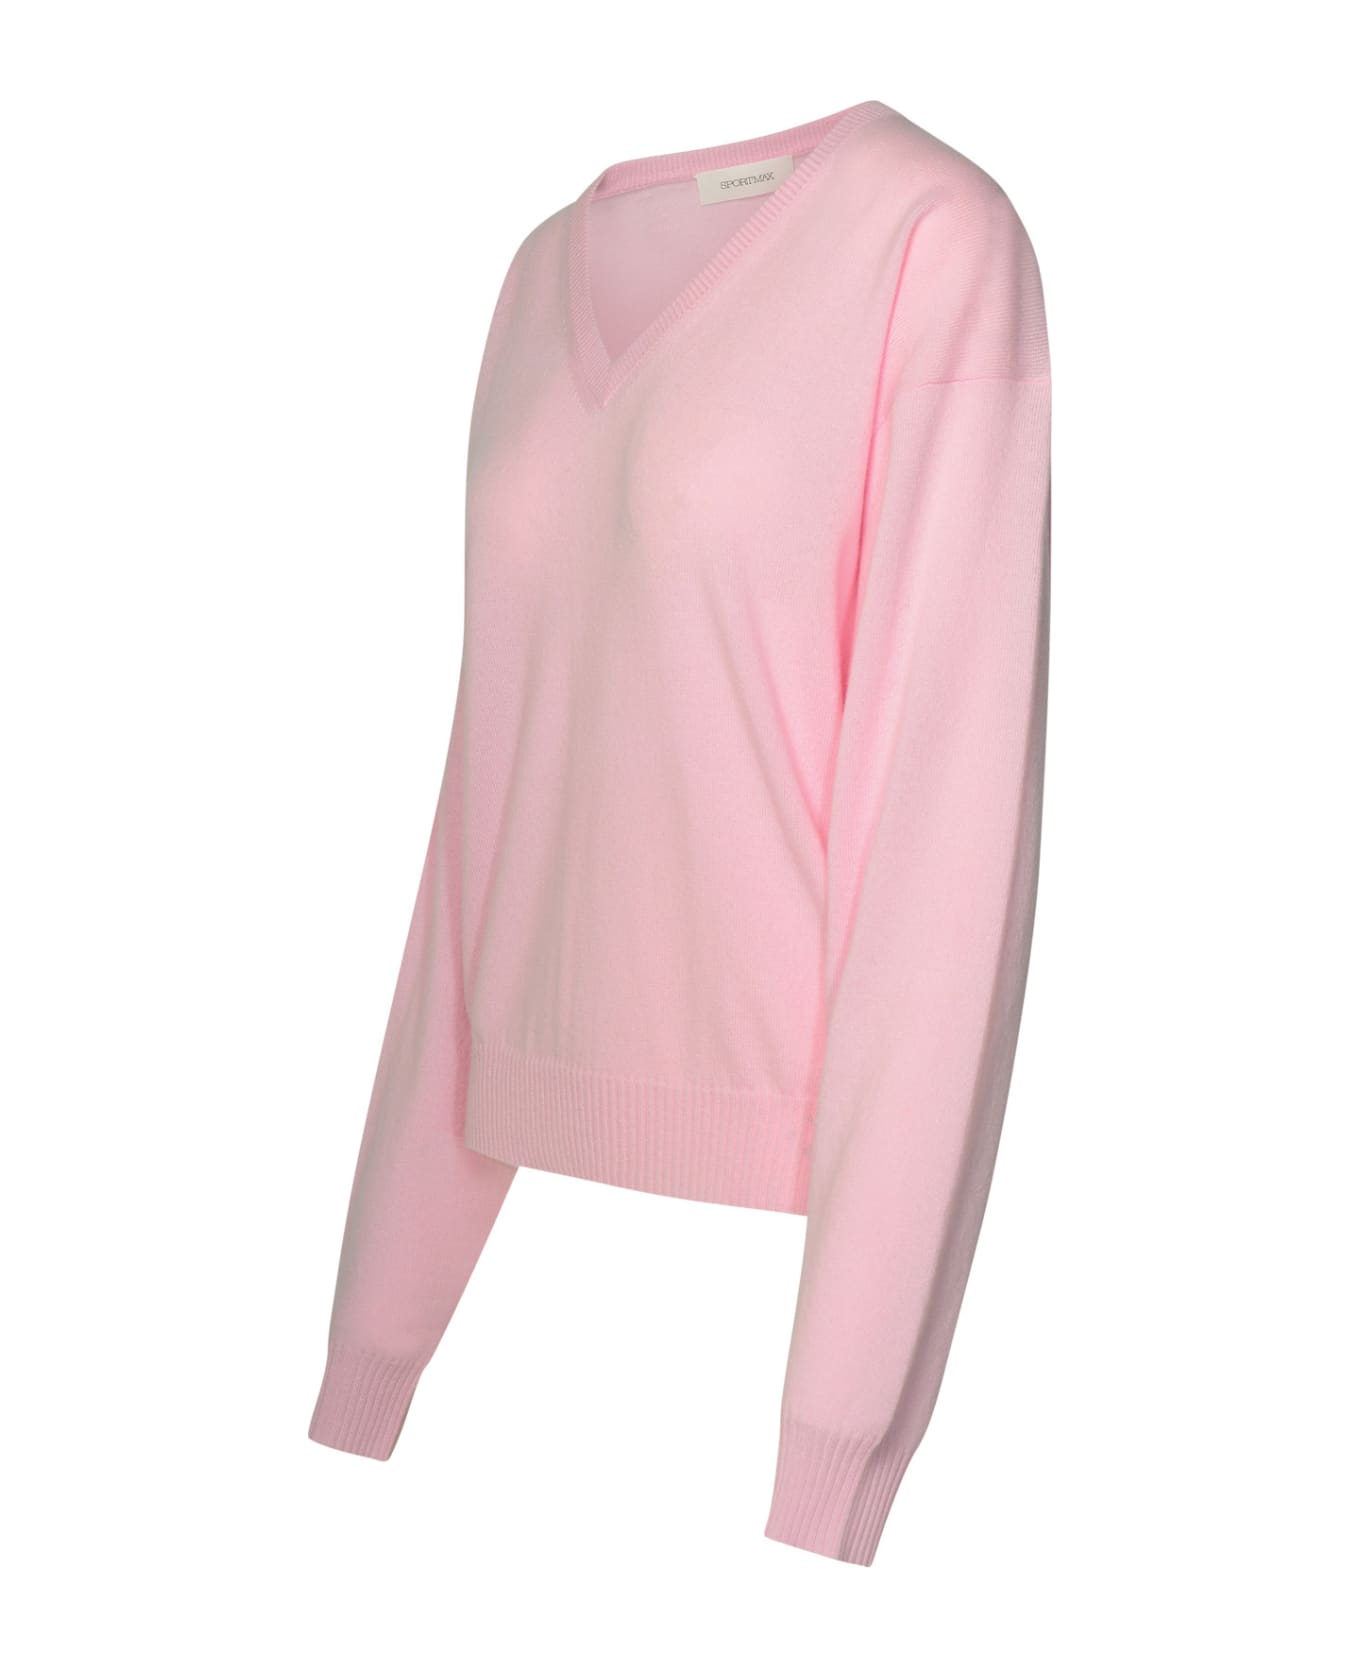 SportMax Pink Wool Blend Sweater - Pink